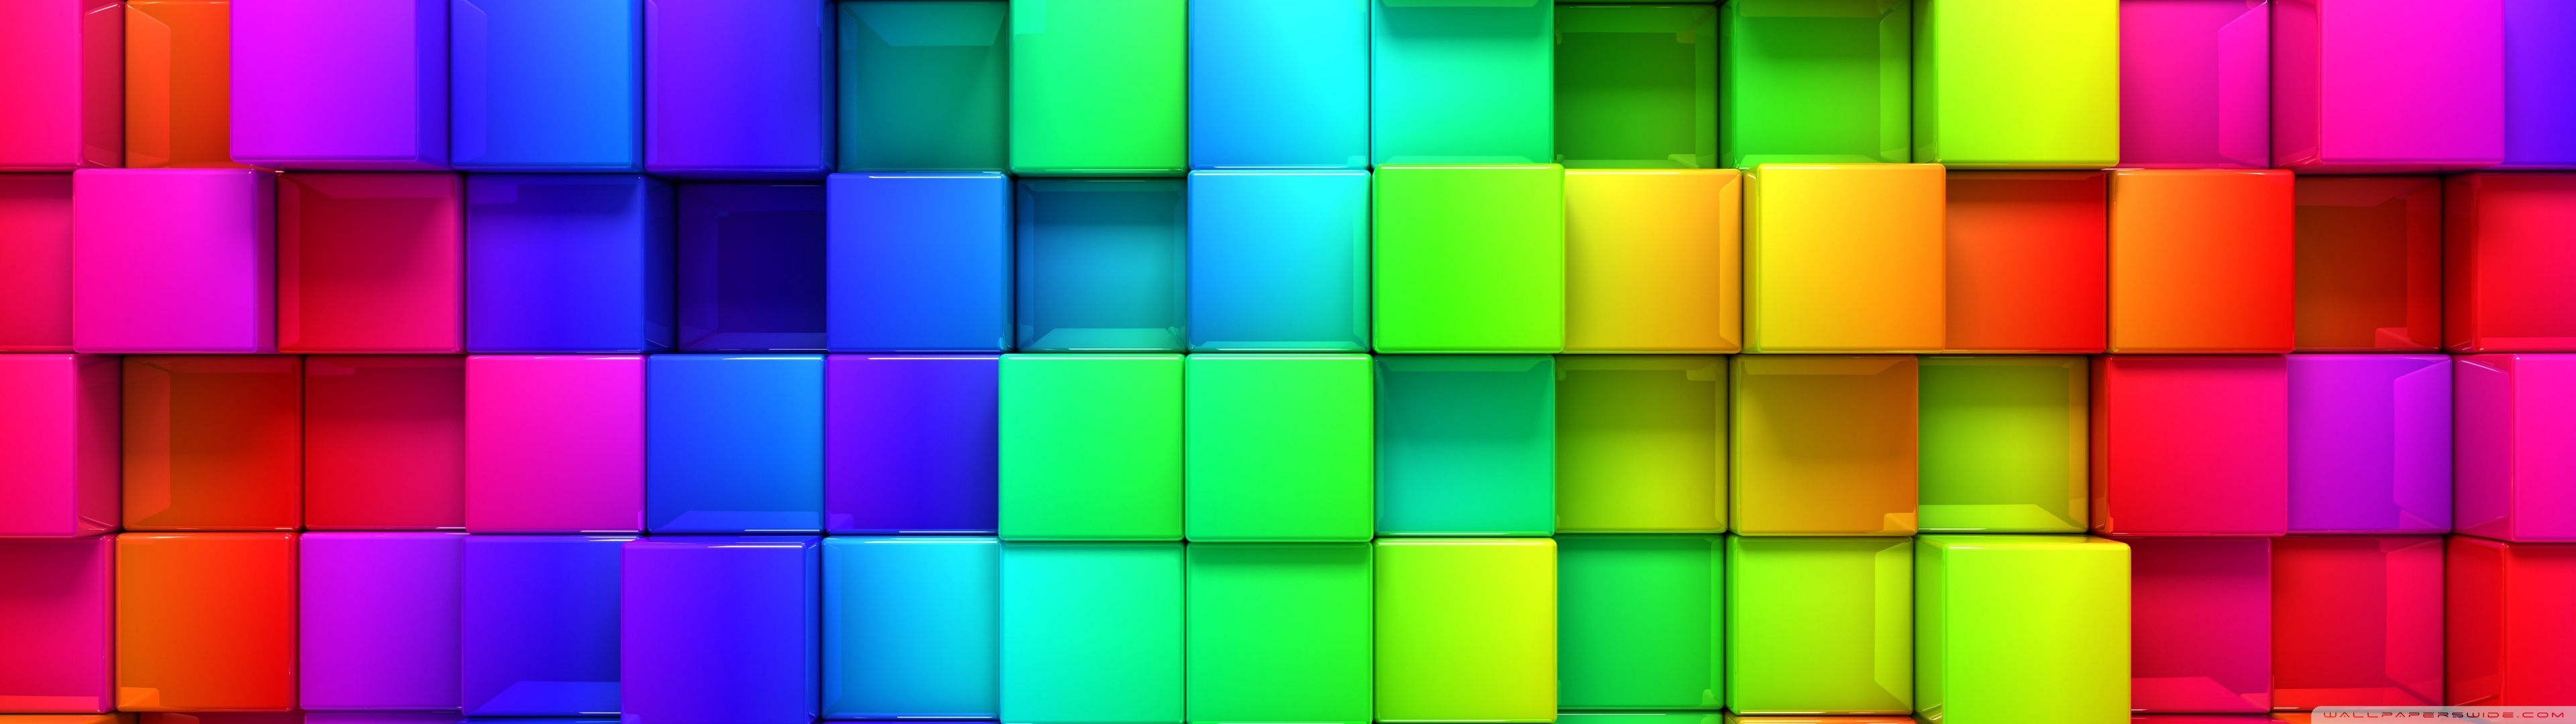 Rainbow Vivid Colors Cubes Ultra HD Desktop Background Wallpaper for: Widescreen & UltraWide Desktop & Laptop, Multi Display, Dual & Triple Monitor, Tablet